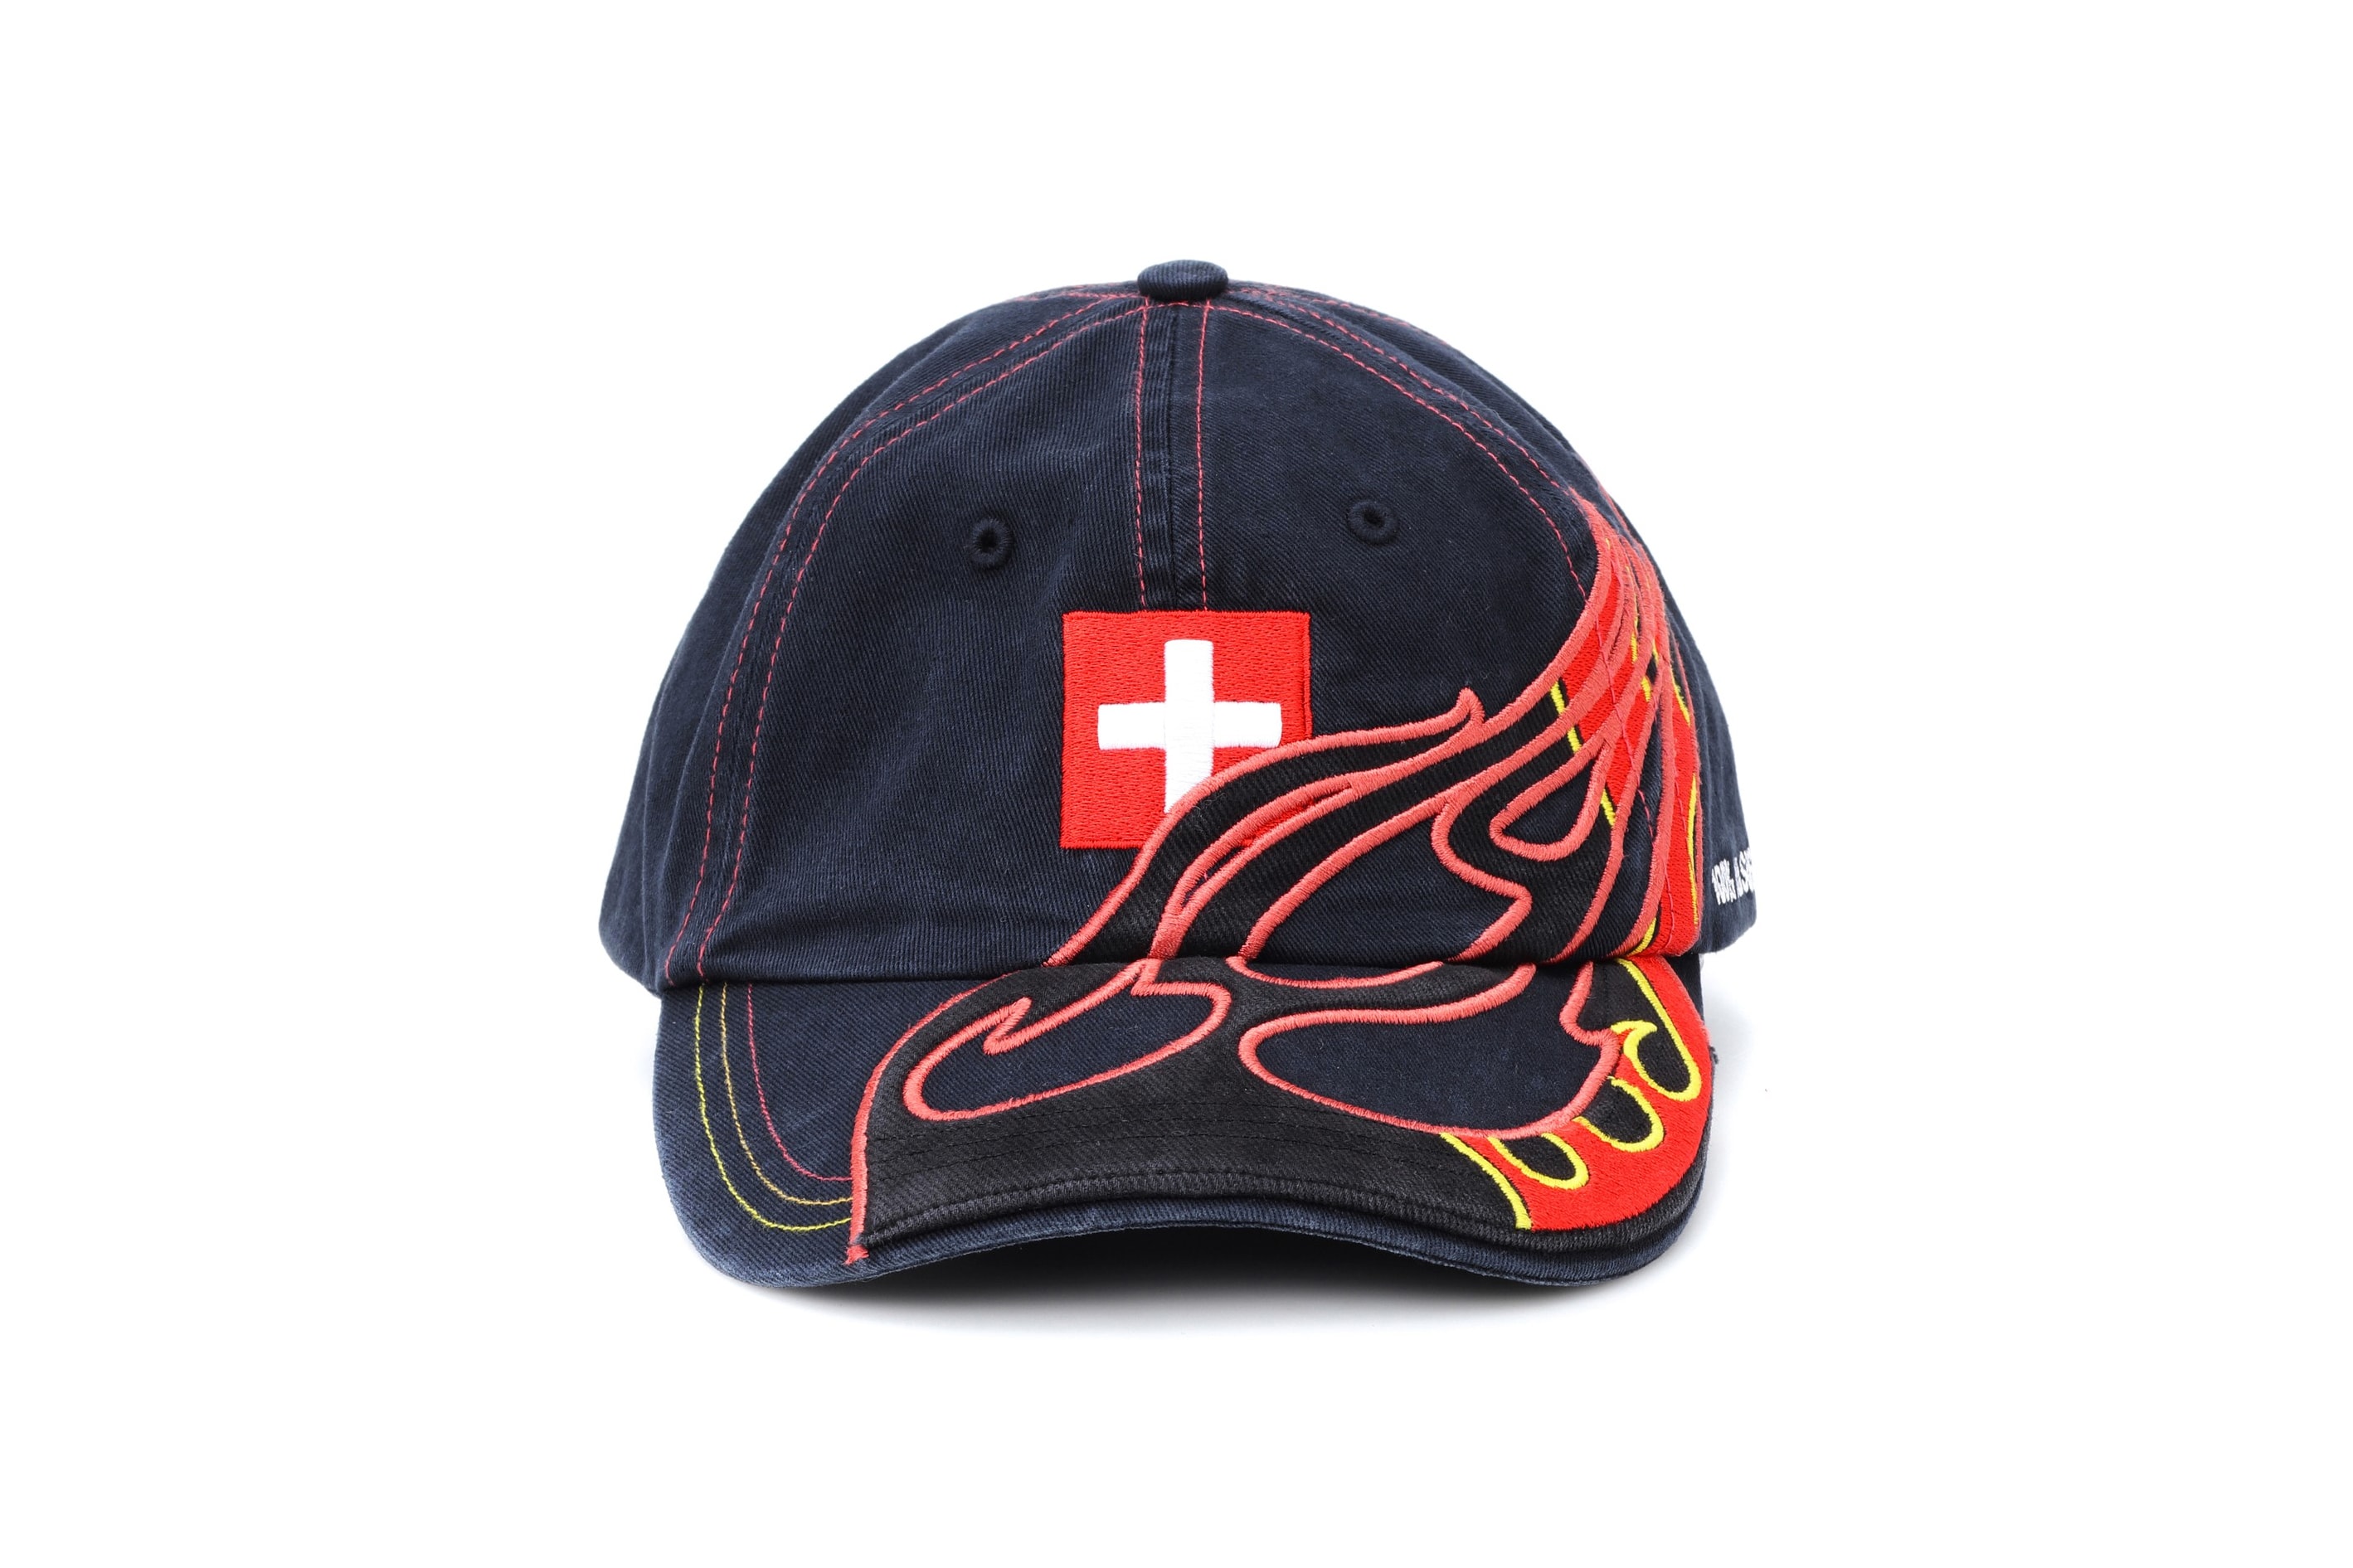 Vetements x Reebok Country Baseball Caps Embroidery Flag Print Hat Headwear Accessories Demna Gvasalia